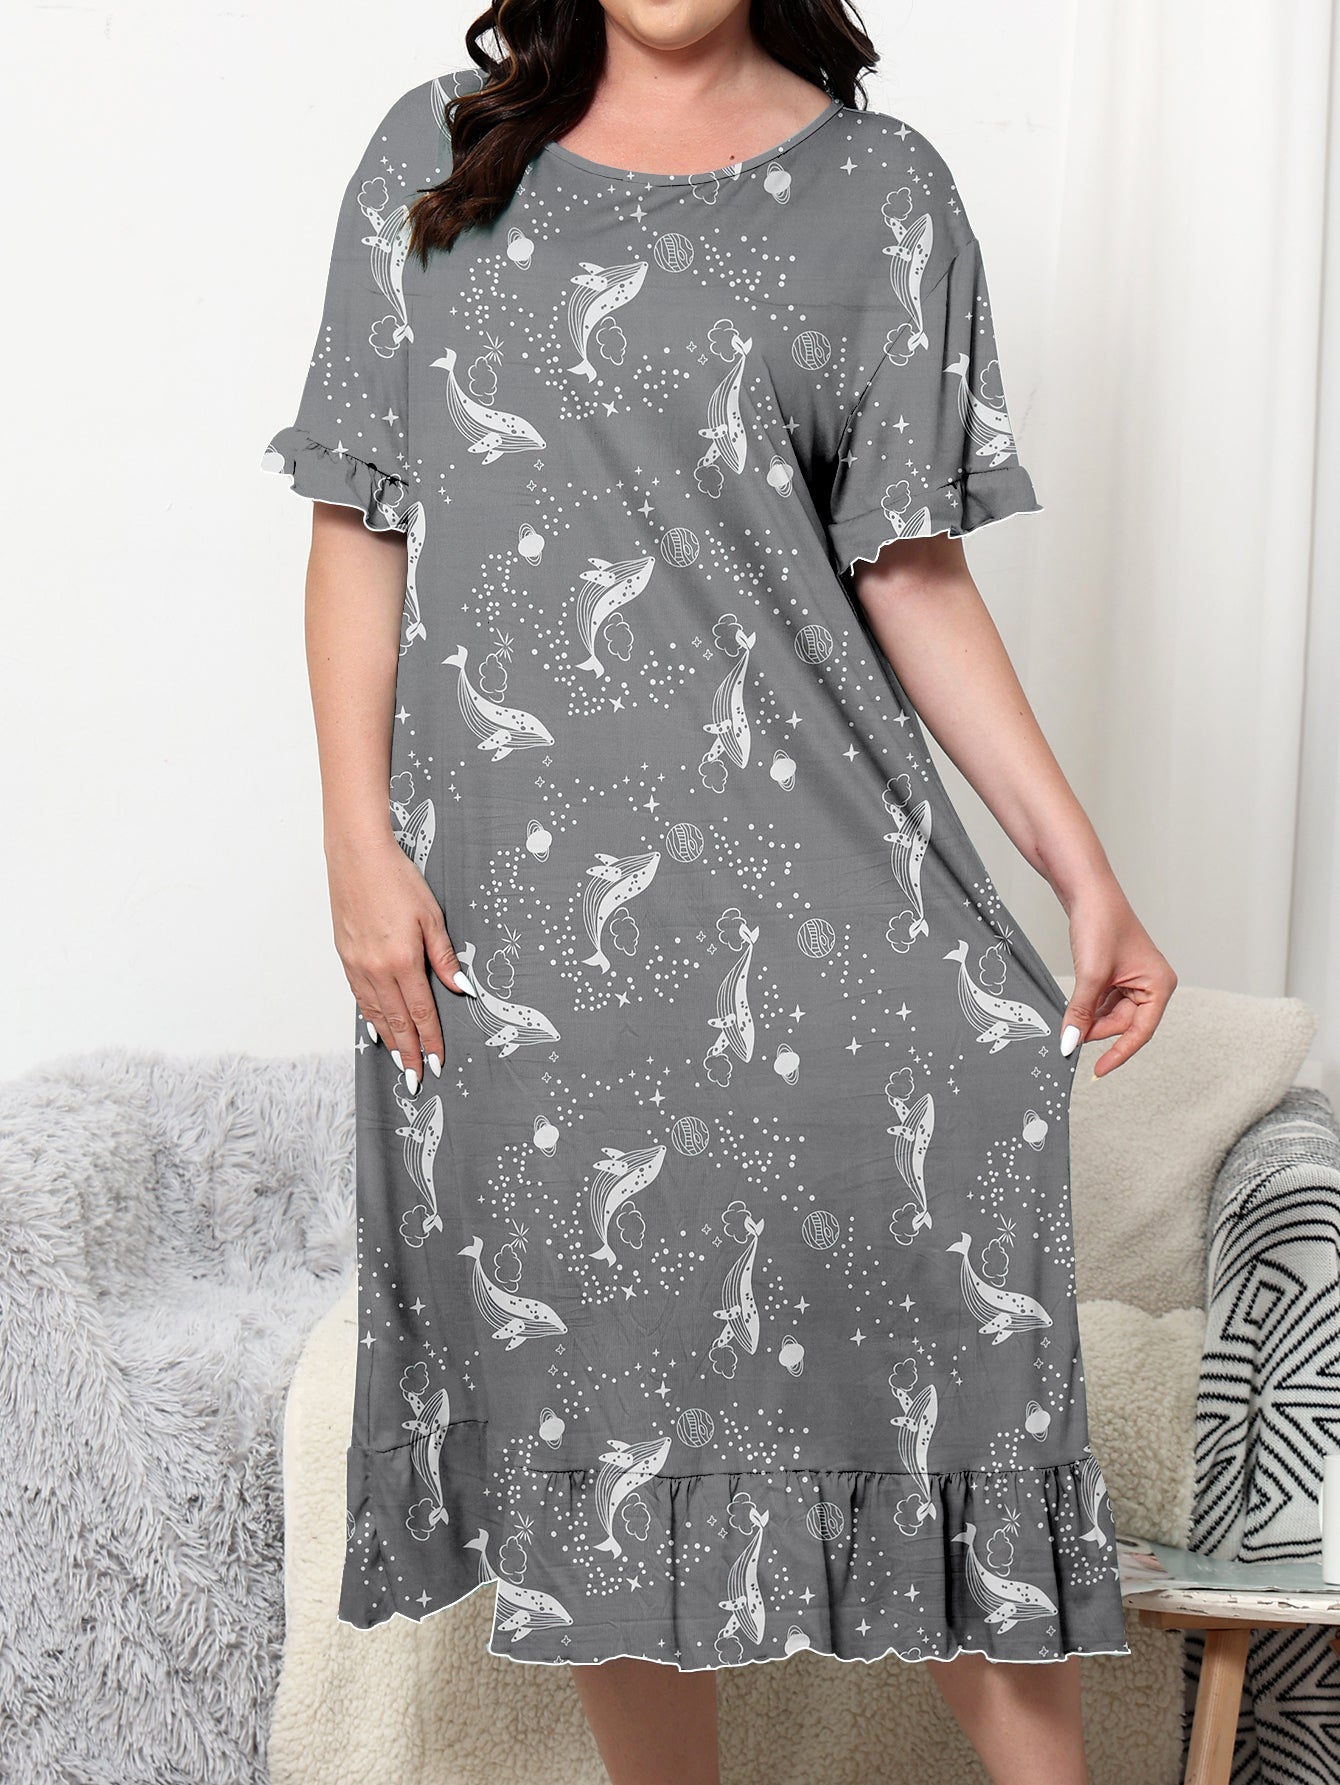 Women's Plus Size Casual Sleep Dress with Cartoon Whale Print and Short Sleeve Ruffle Trim